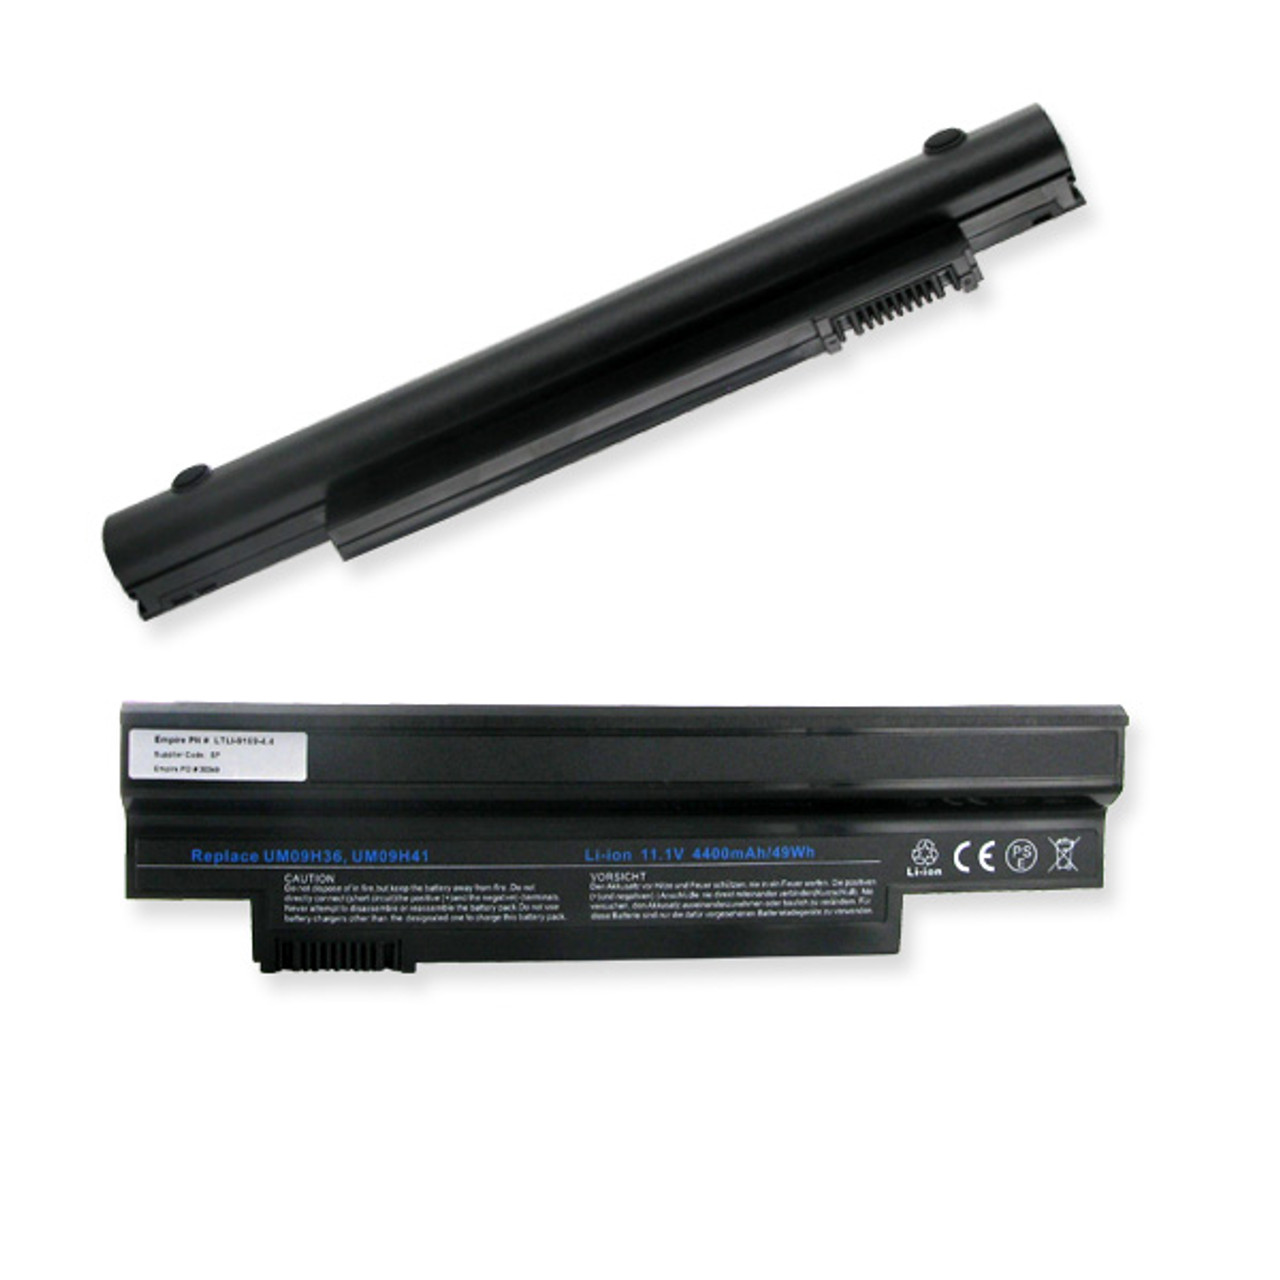 Acer UM09H41 Laptop Battery Replacement 4400mAh